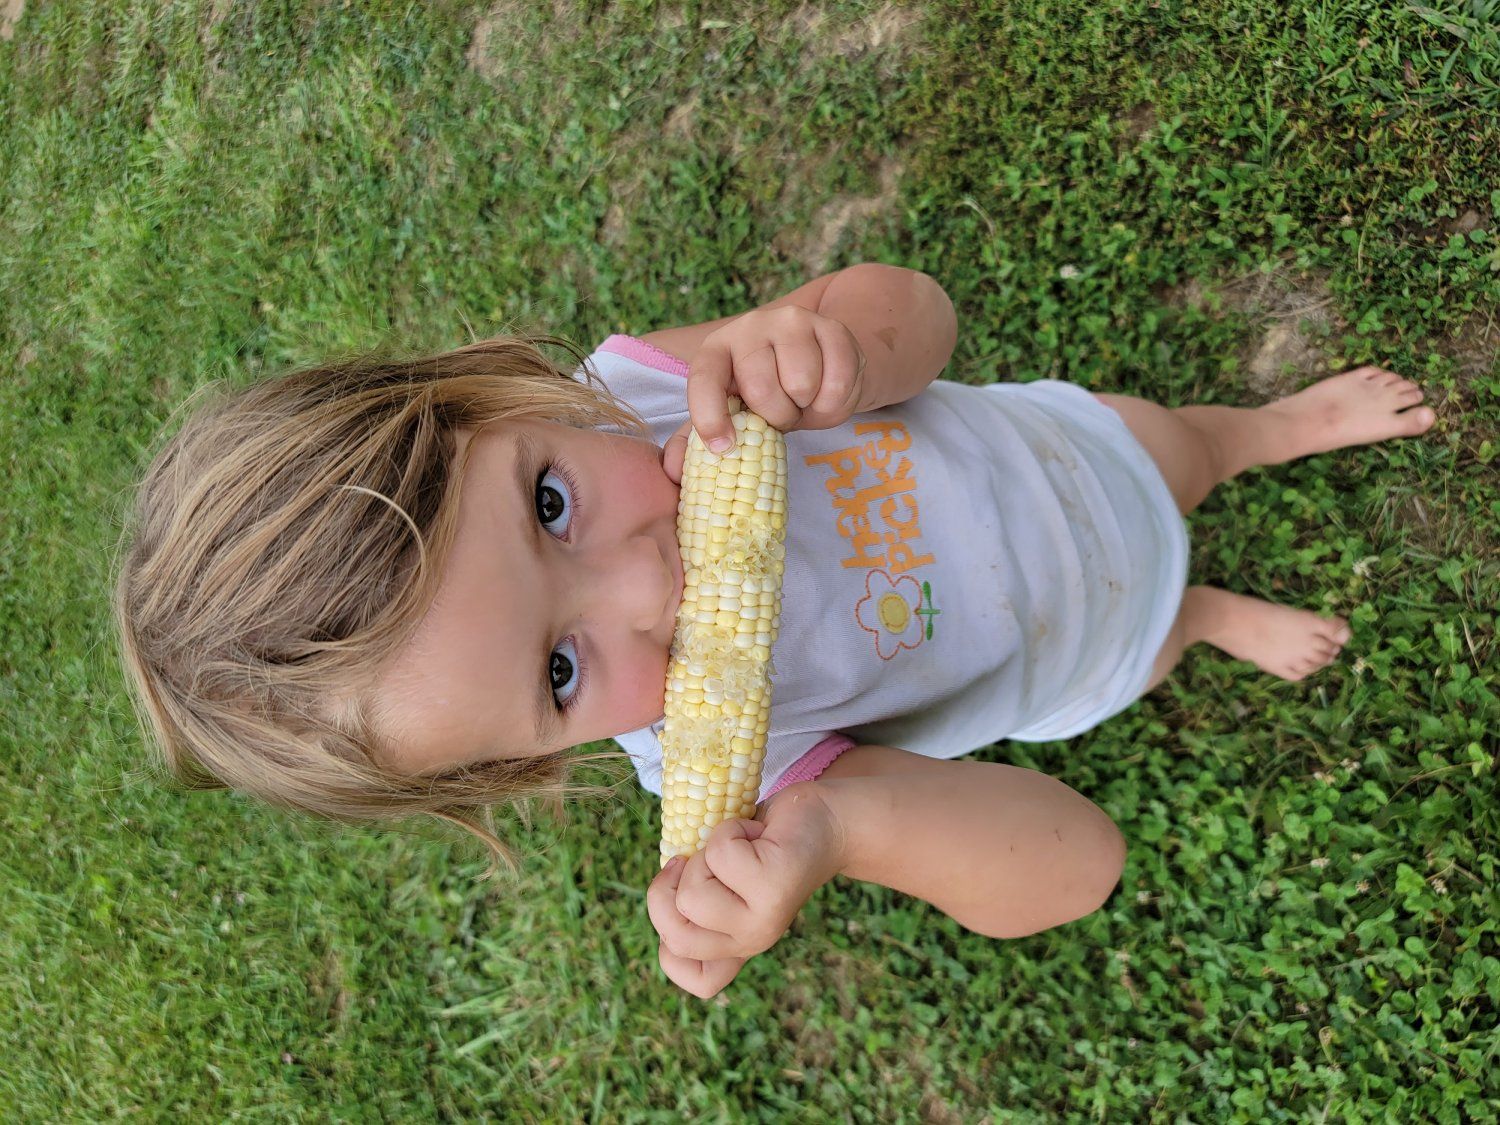 Next Happening: Sweet Corn Season has begun